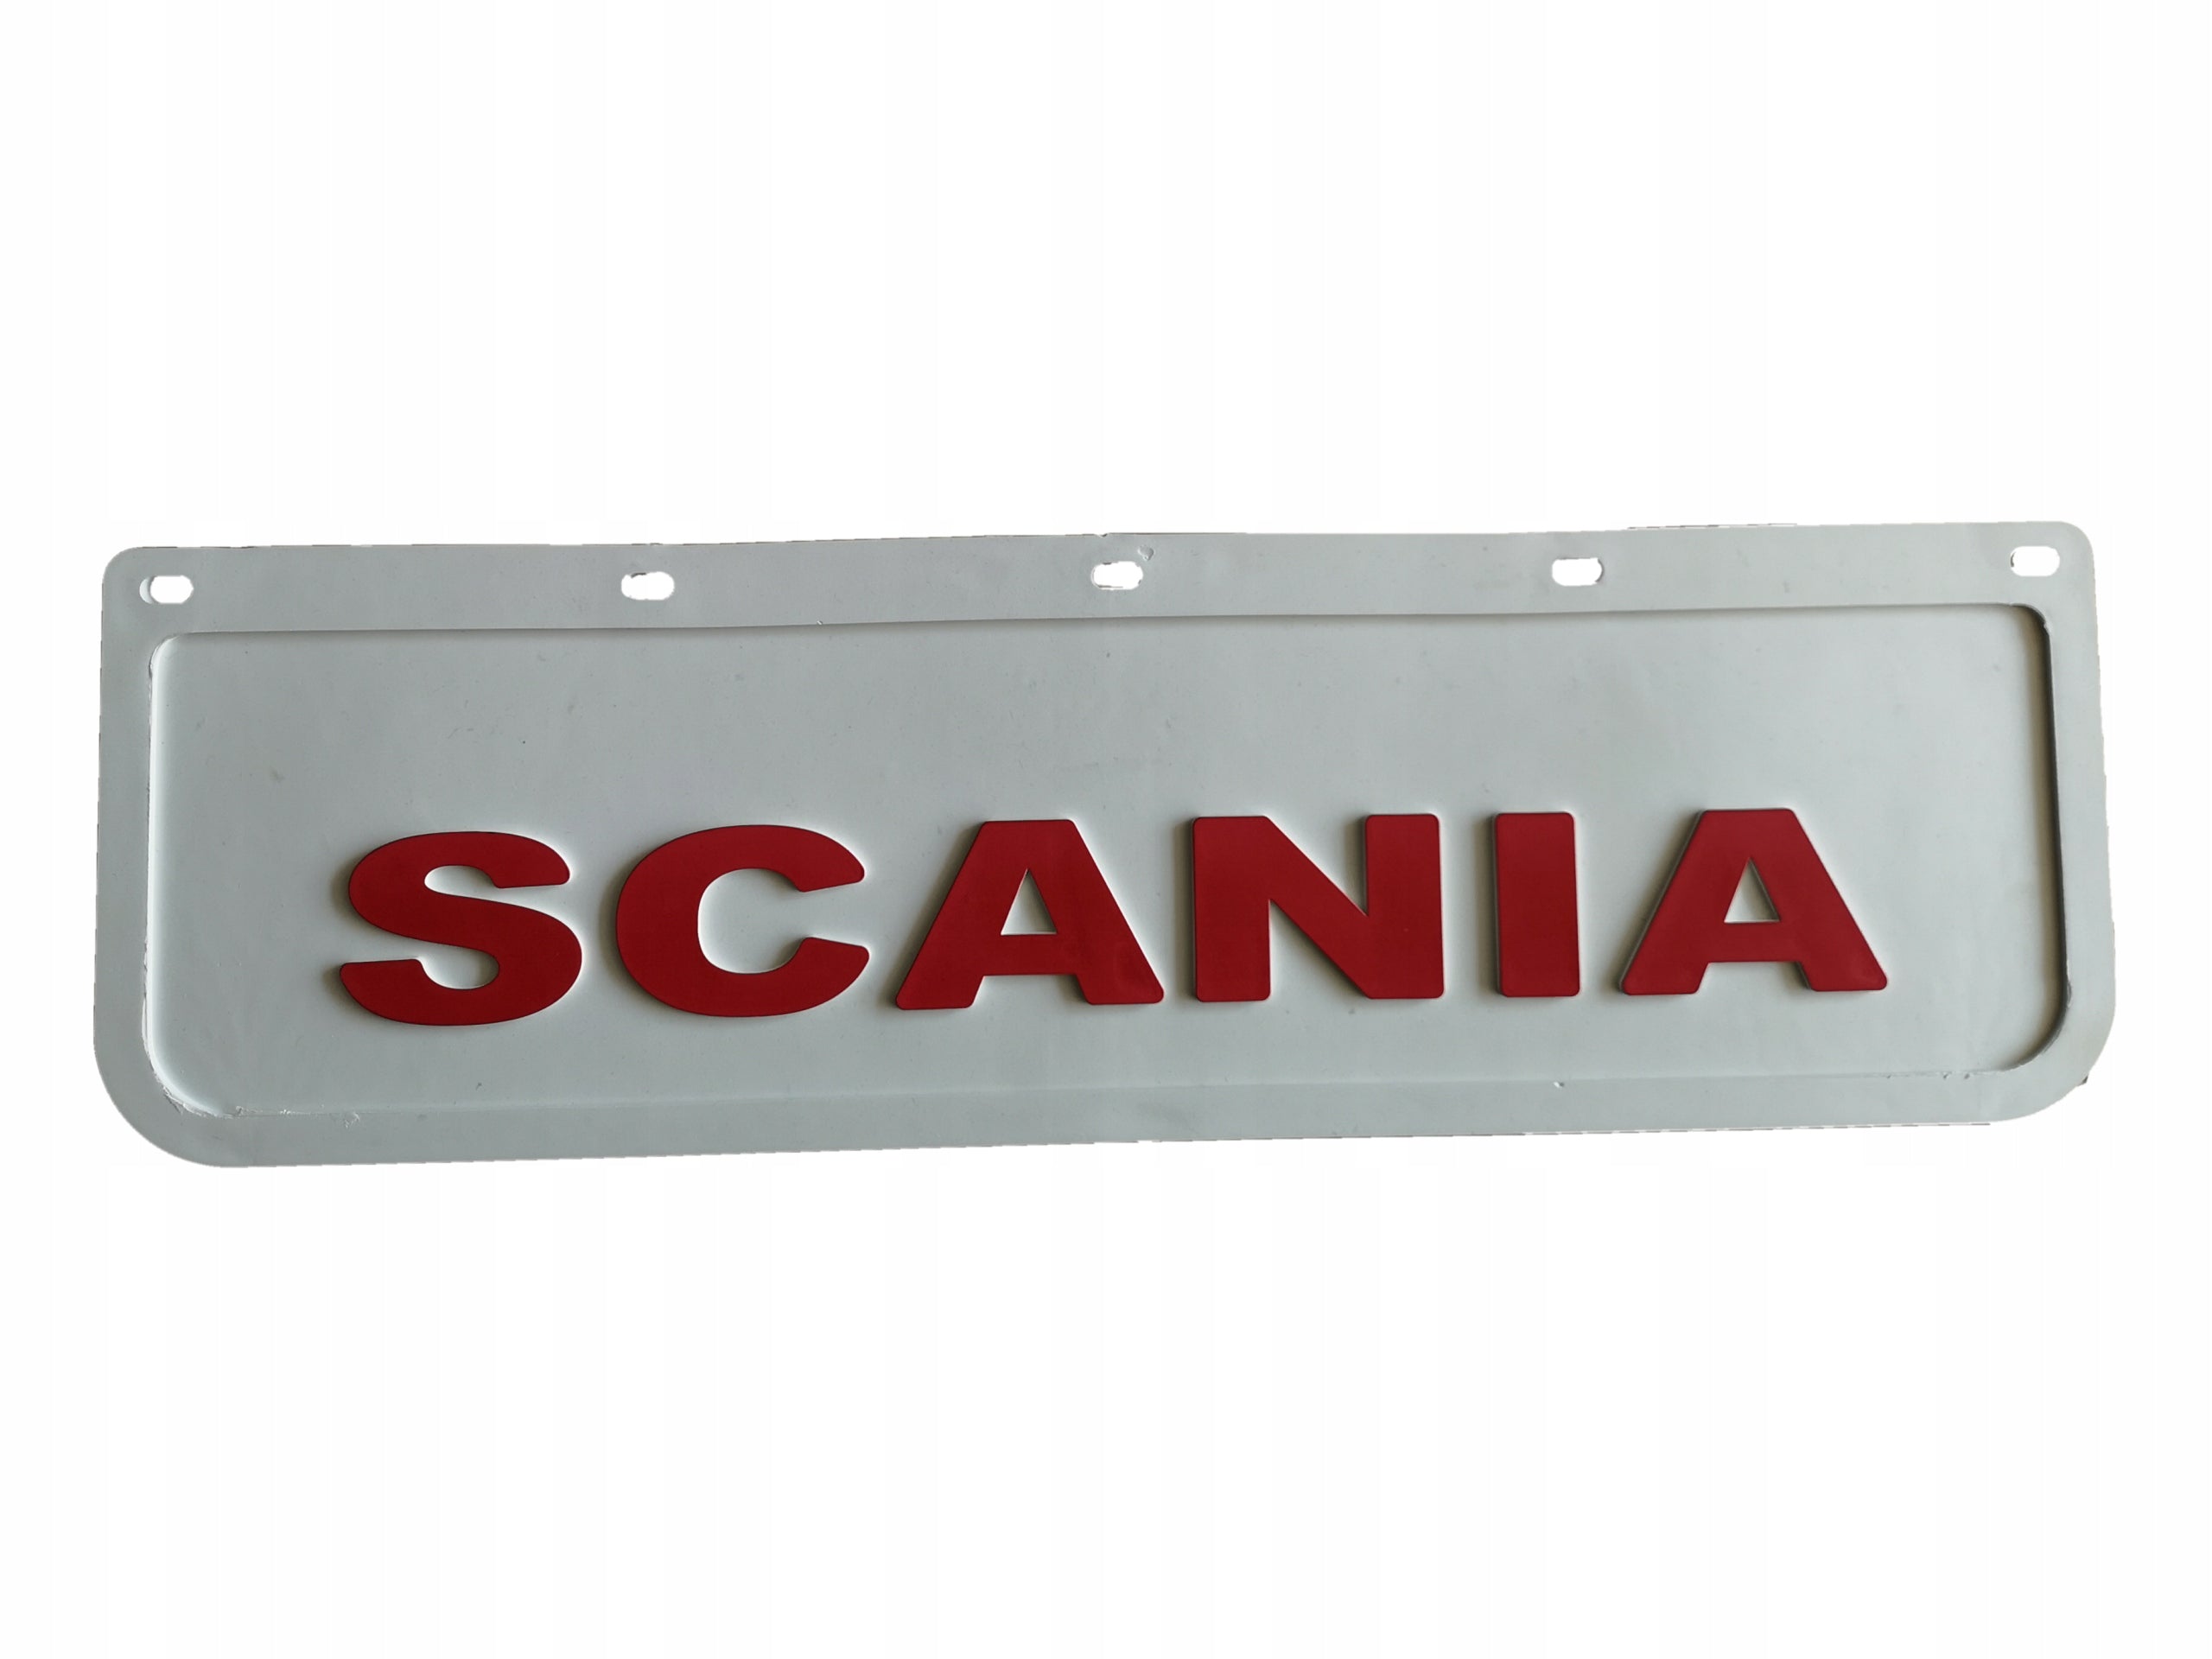 Mud flap Scania, 60x18cm - White